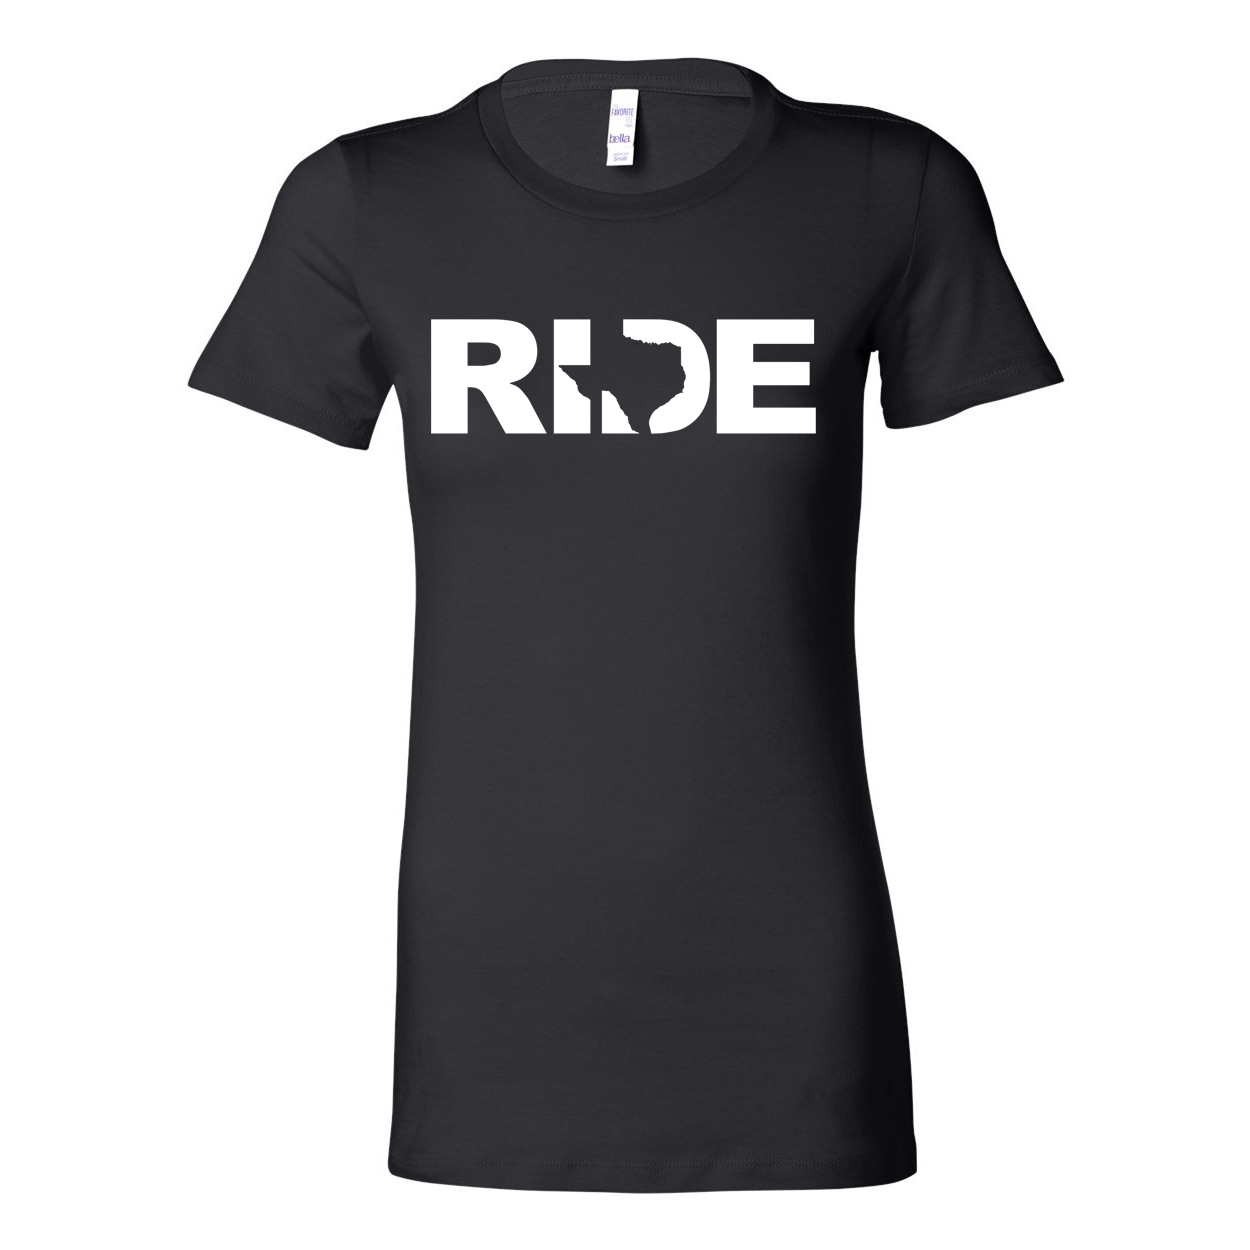 Ride Texas Classic Women's Fitted Tri-Blend T-Shirt Black (White Logo)